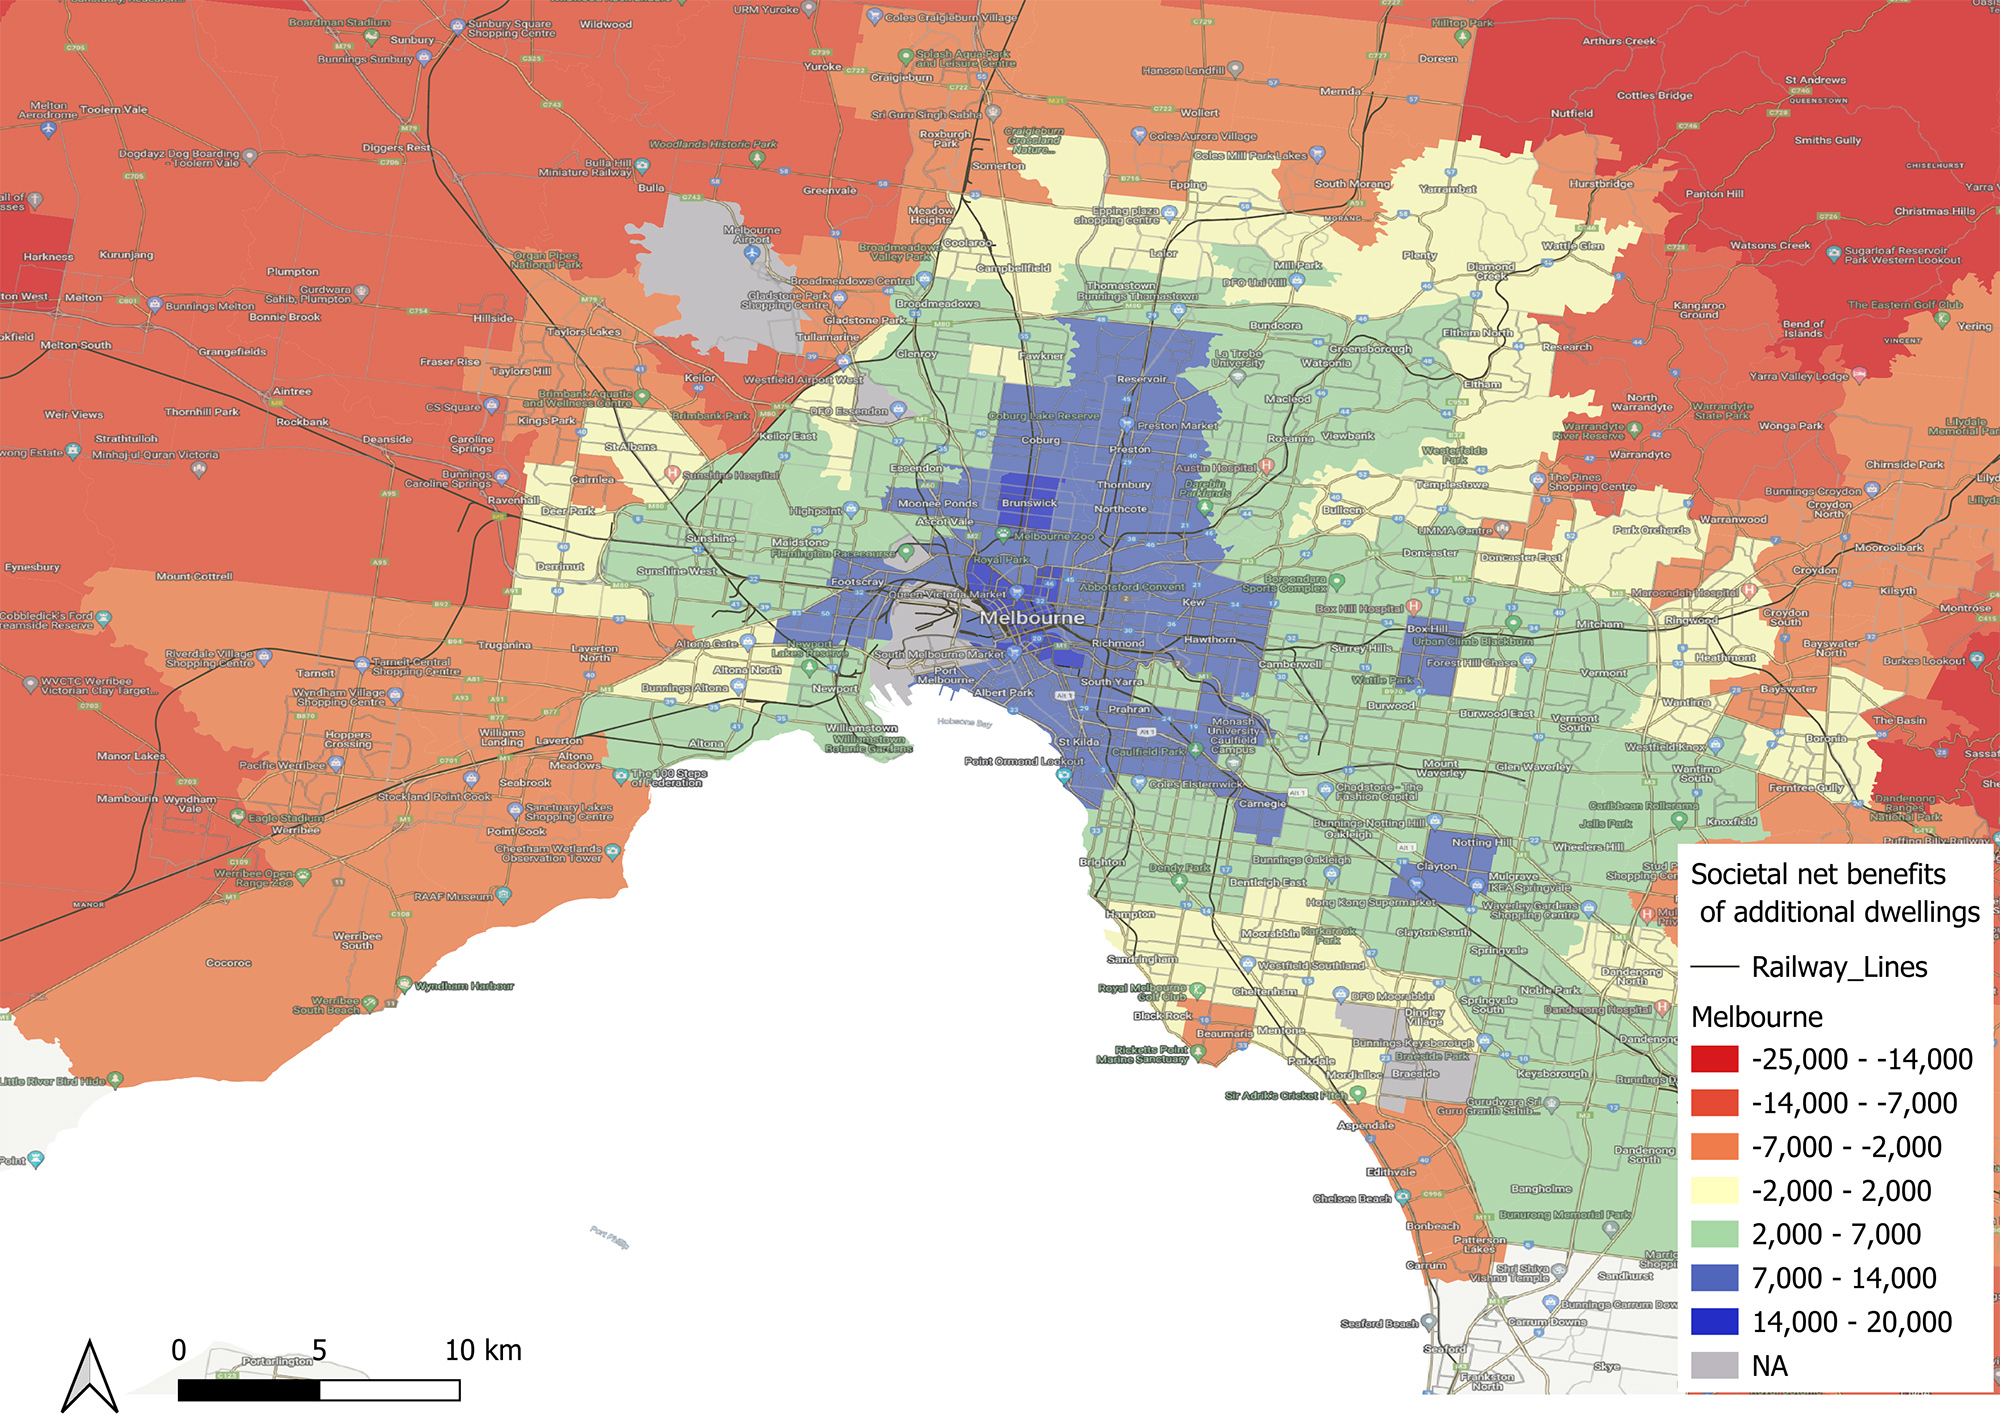 Societal net benefits of additional dwellings Melbourne